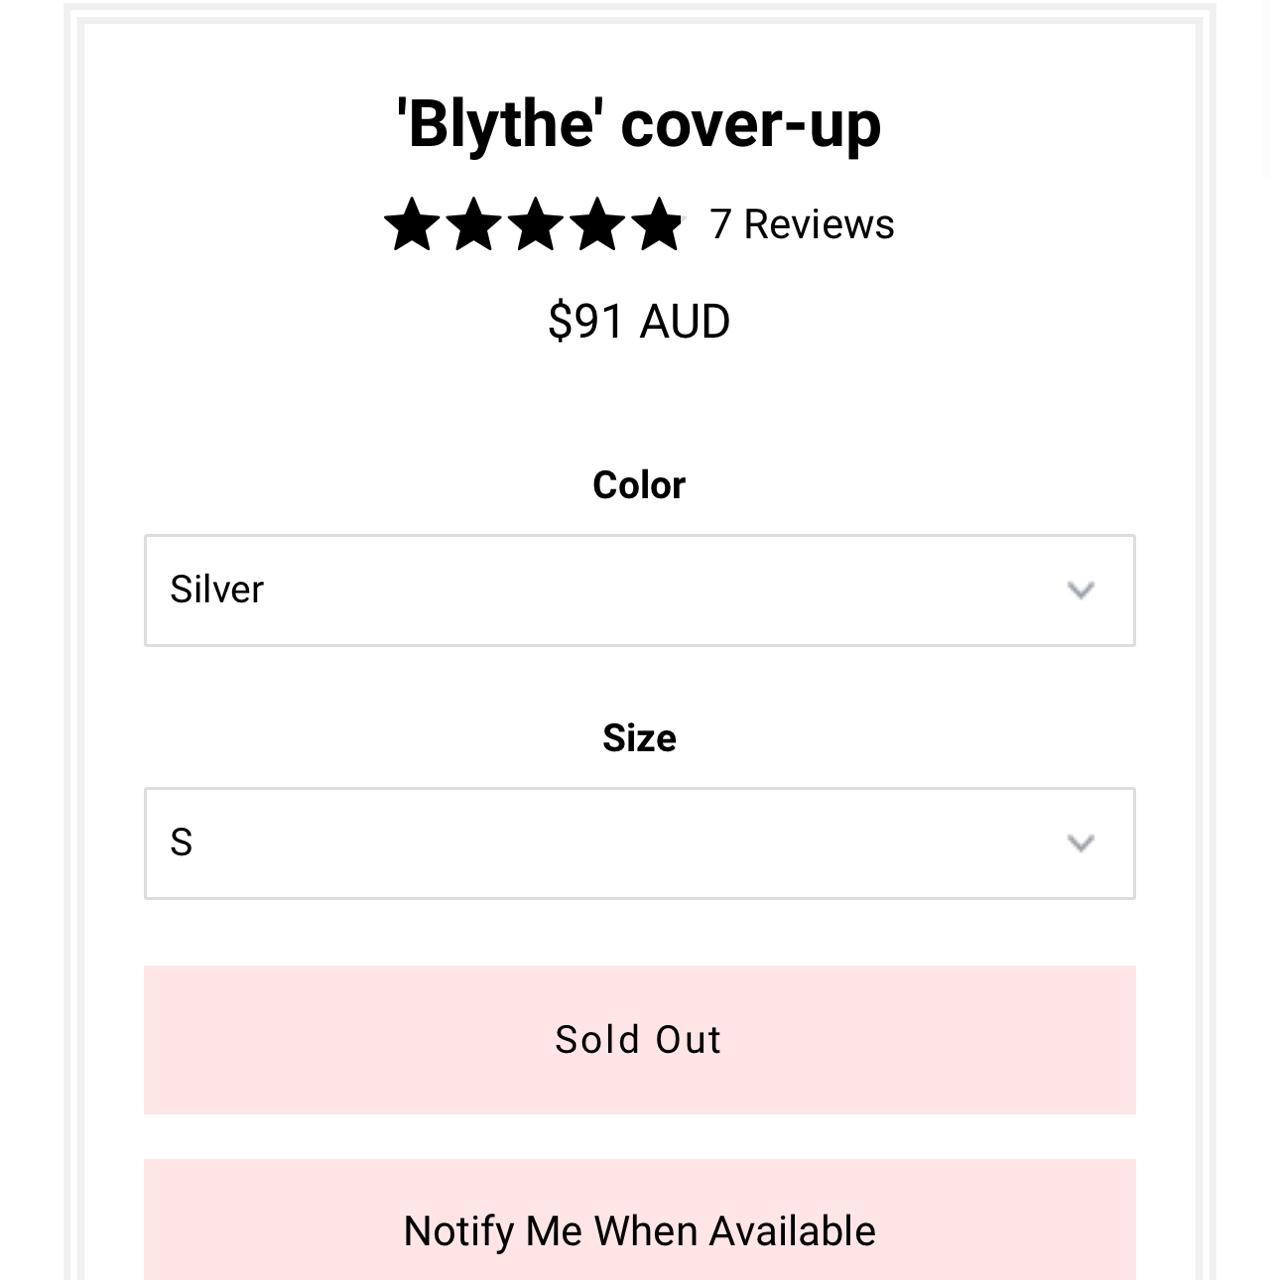 Blythe' cover-up